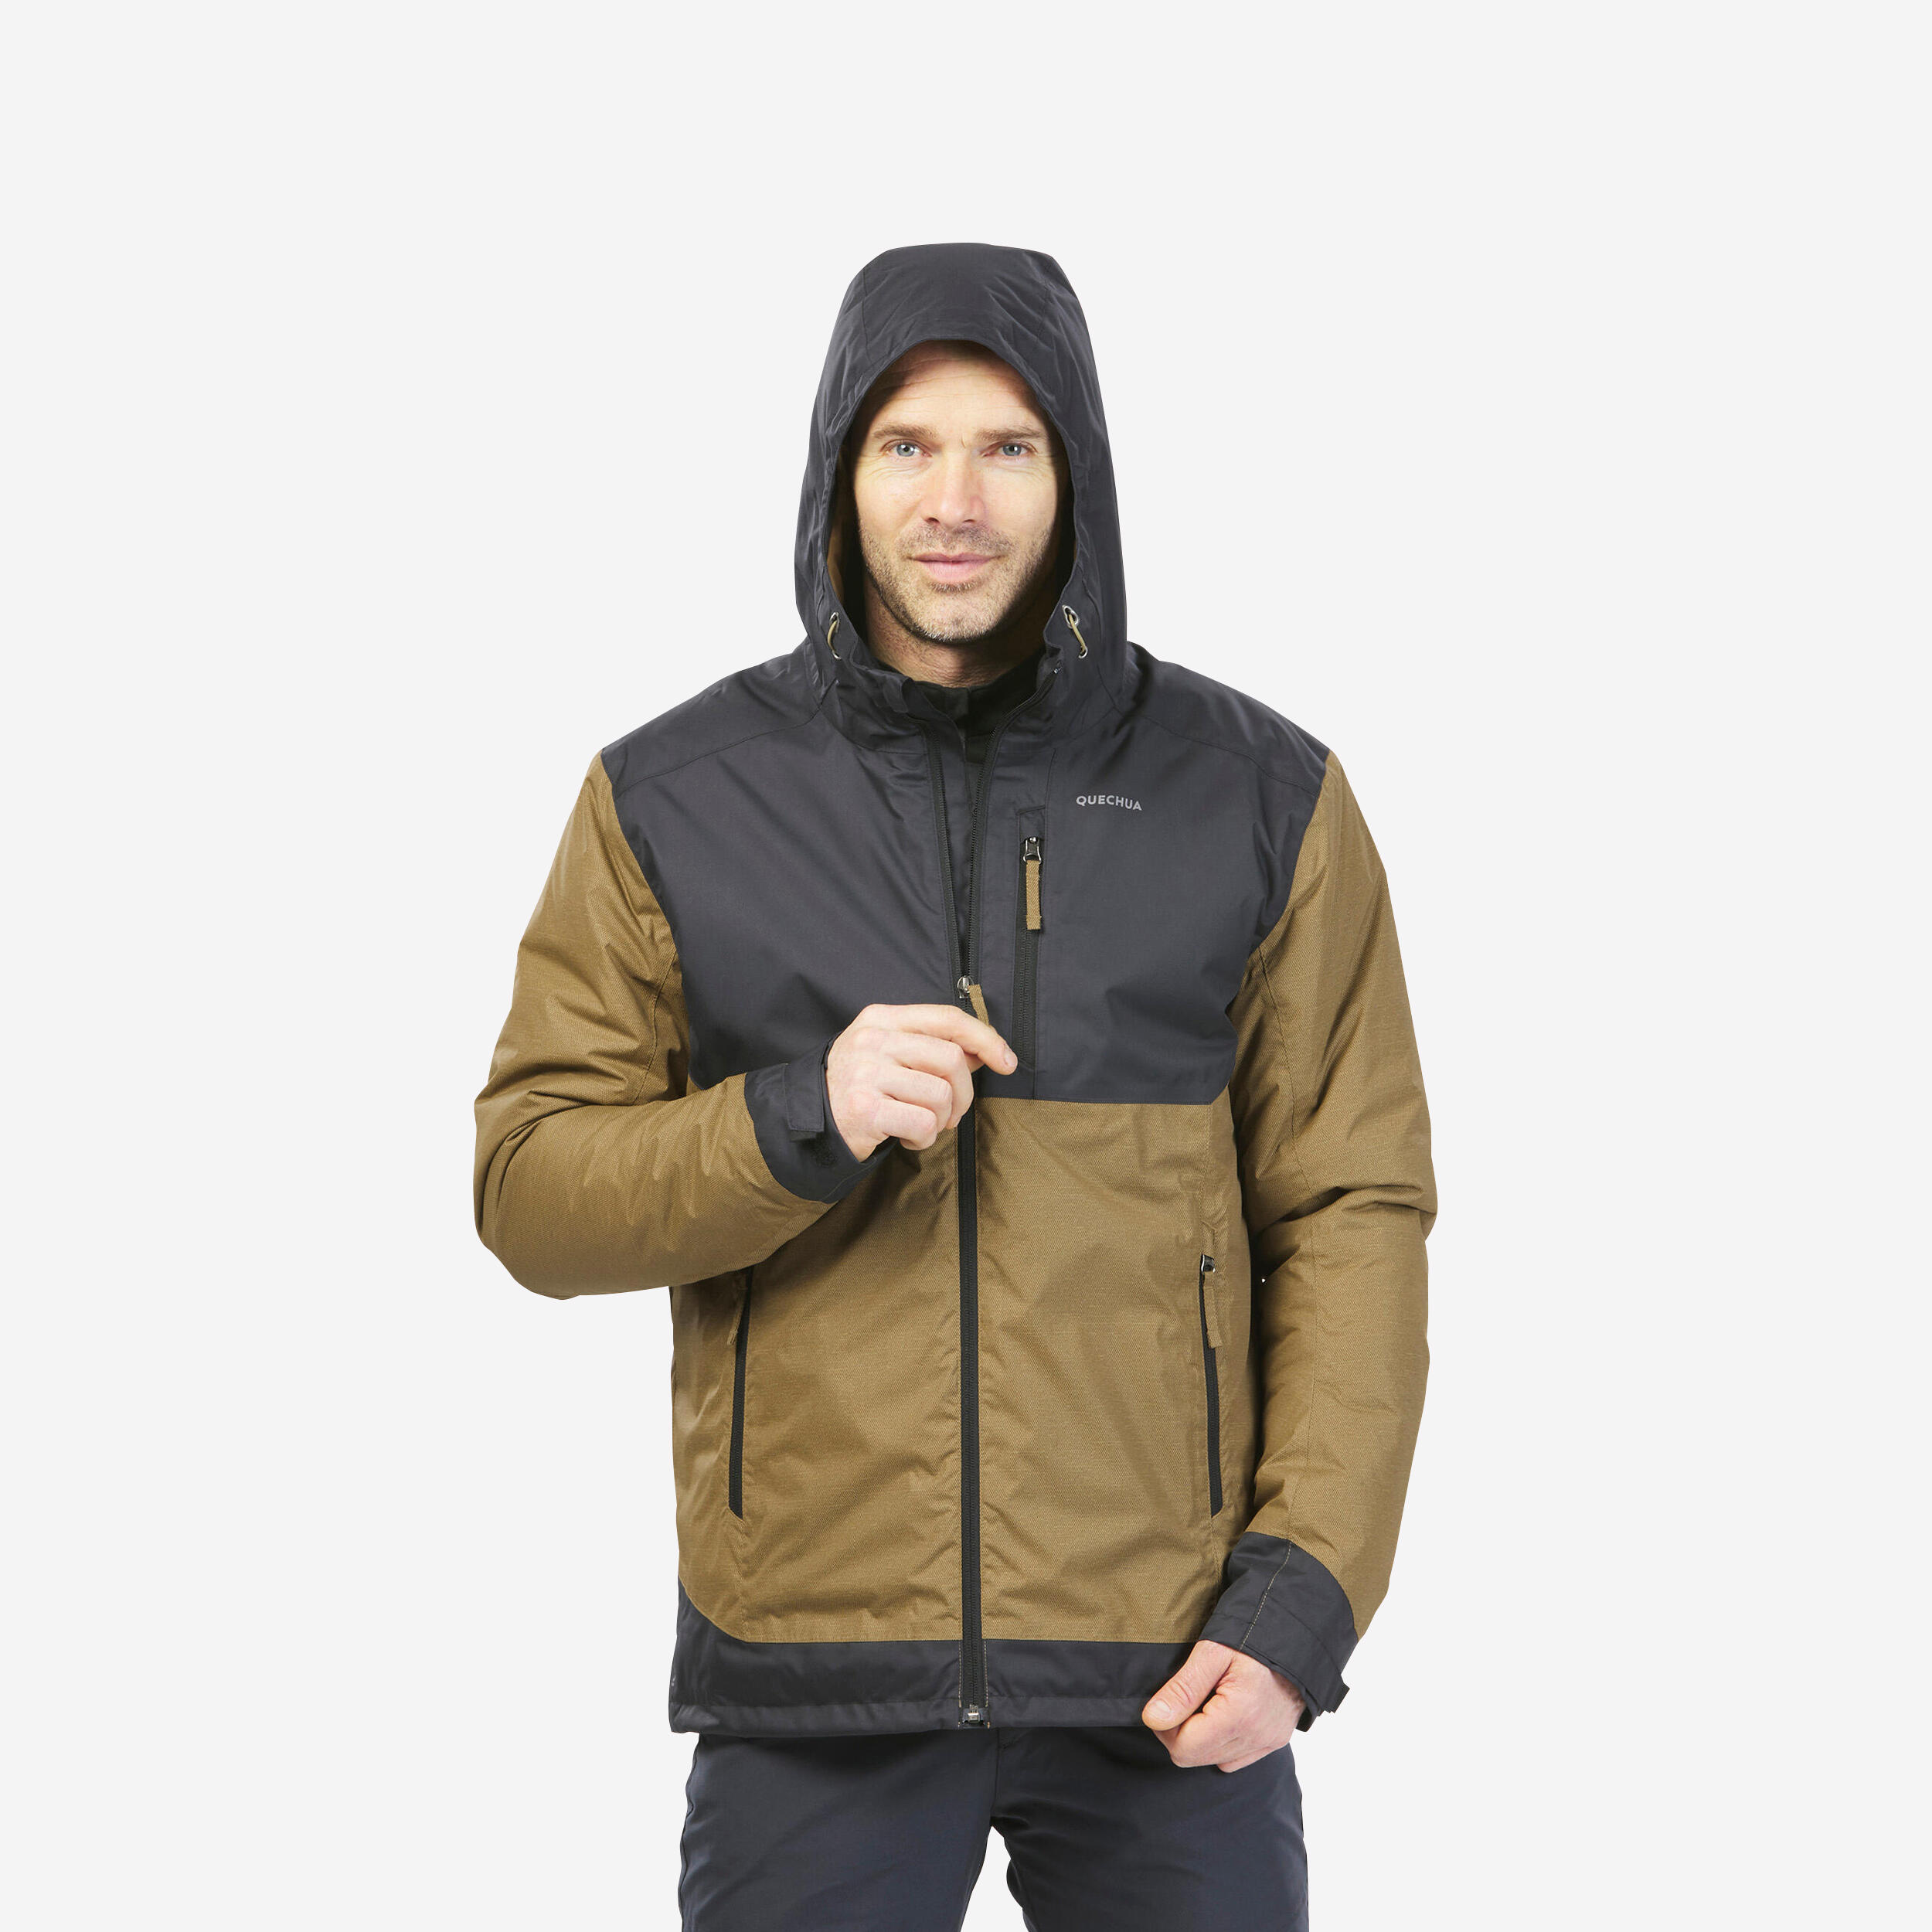 Men’s hiking waterproof winter jacket - SH500 -10°C 1/22